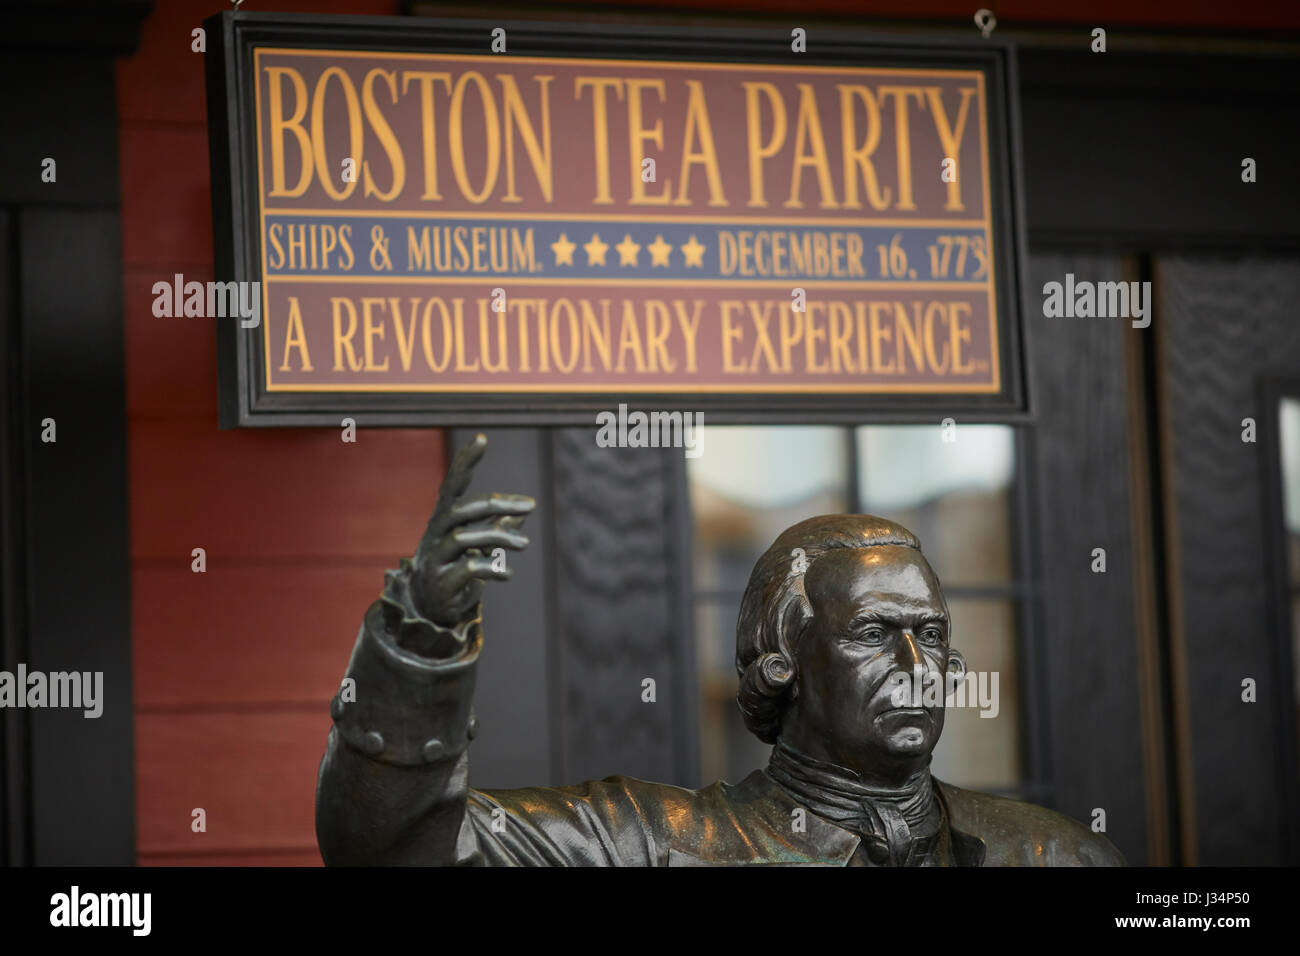 Statue of Samuel Adams outside Boston Tea Party, Ships and Muesum, Boston Massachusetts, United States, USA, Stock Photo